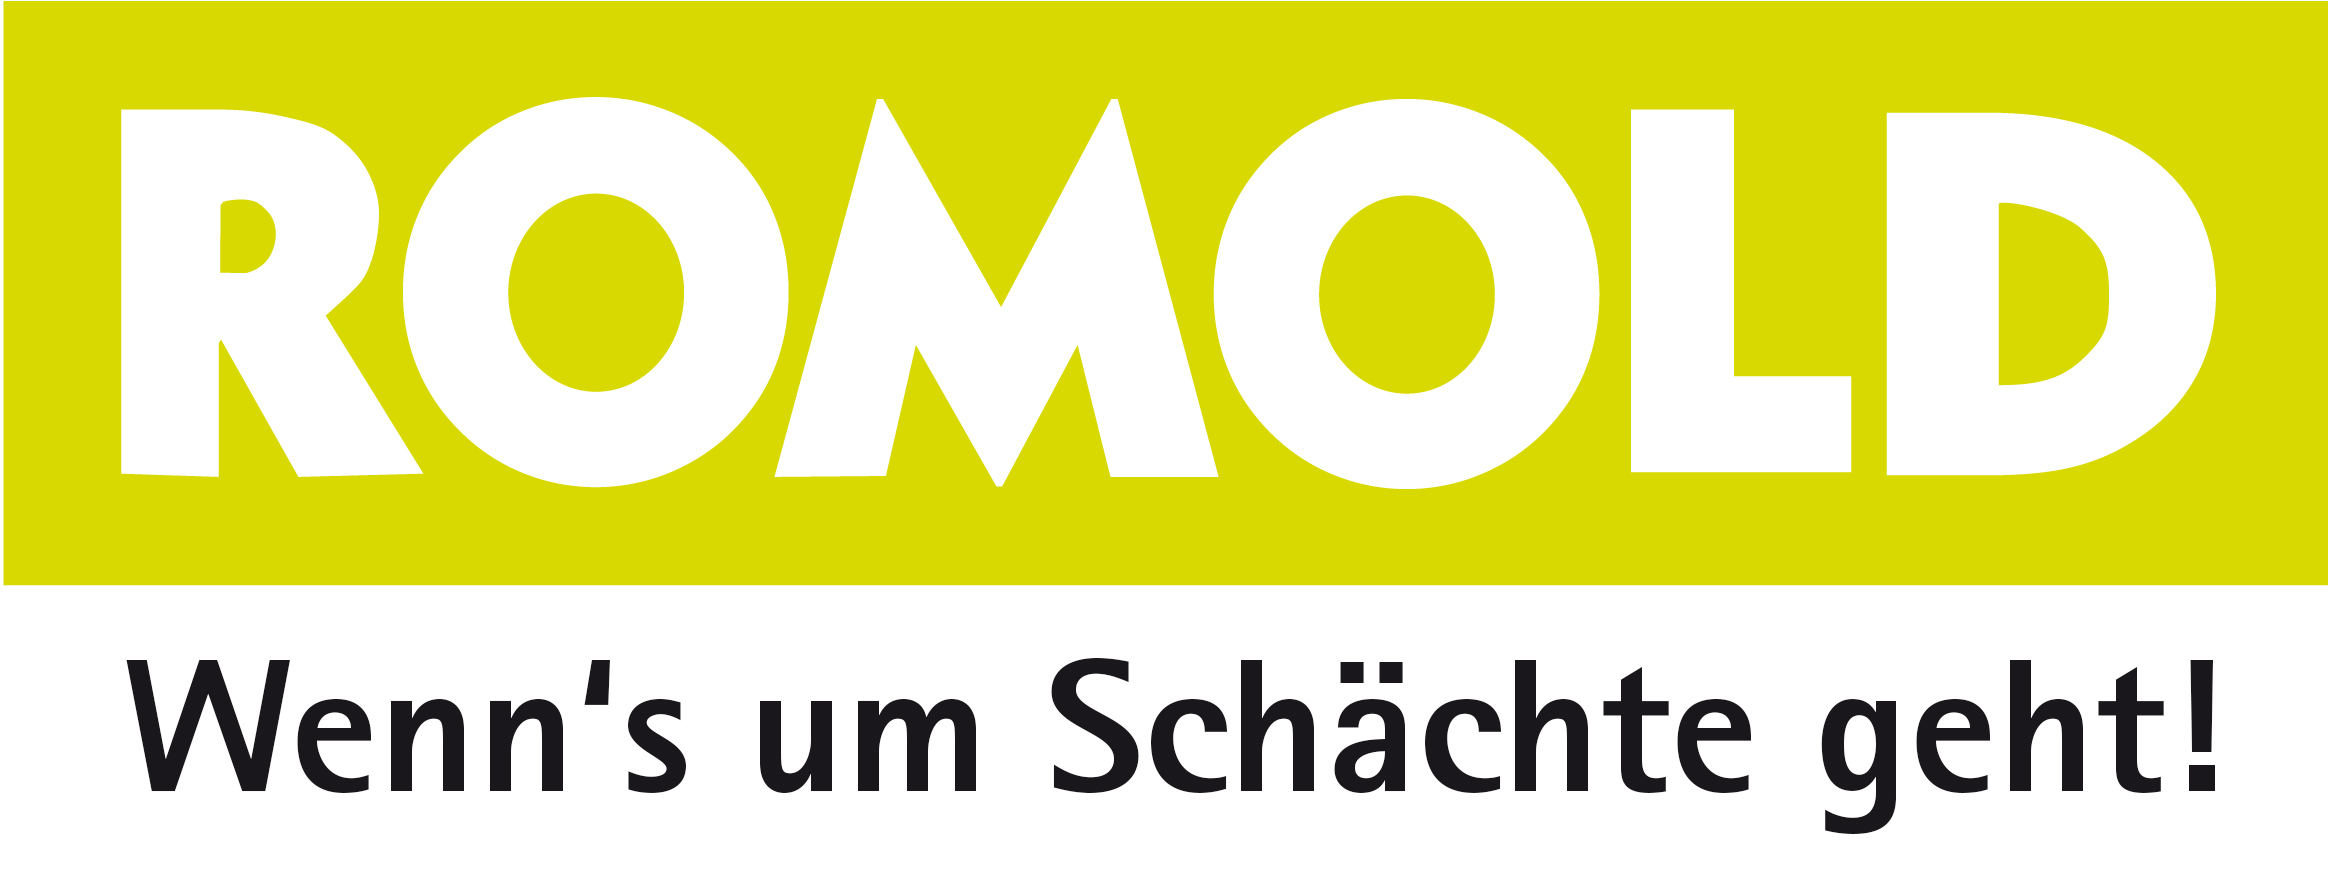 ROMOLD Logo mit Claim 2019